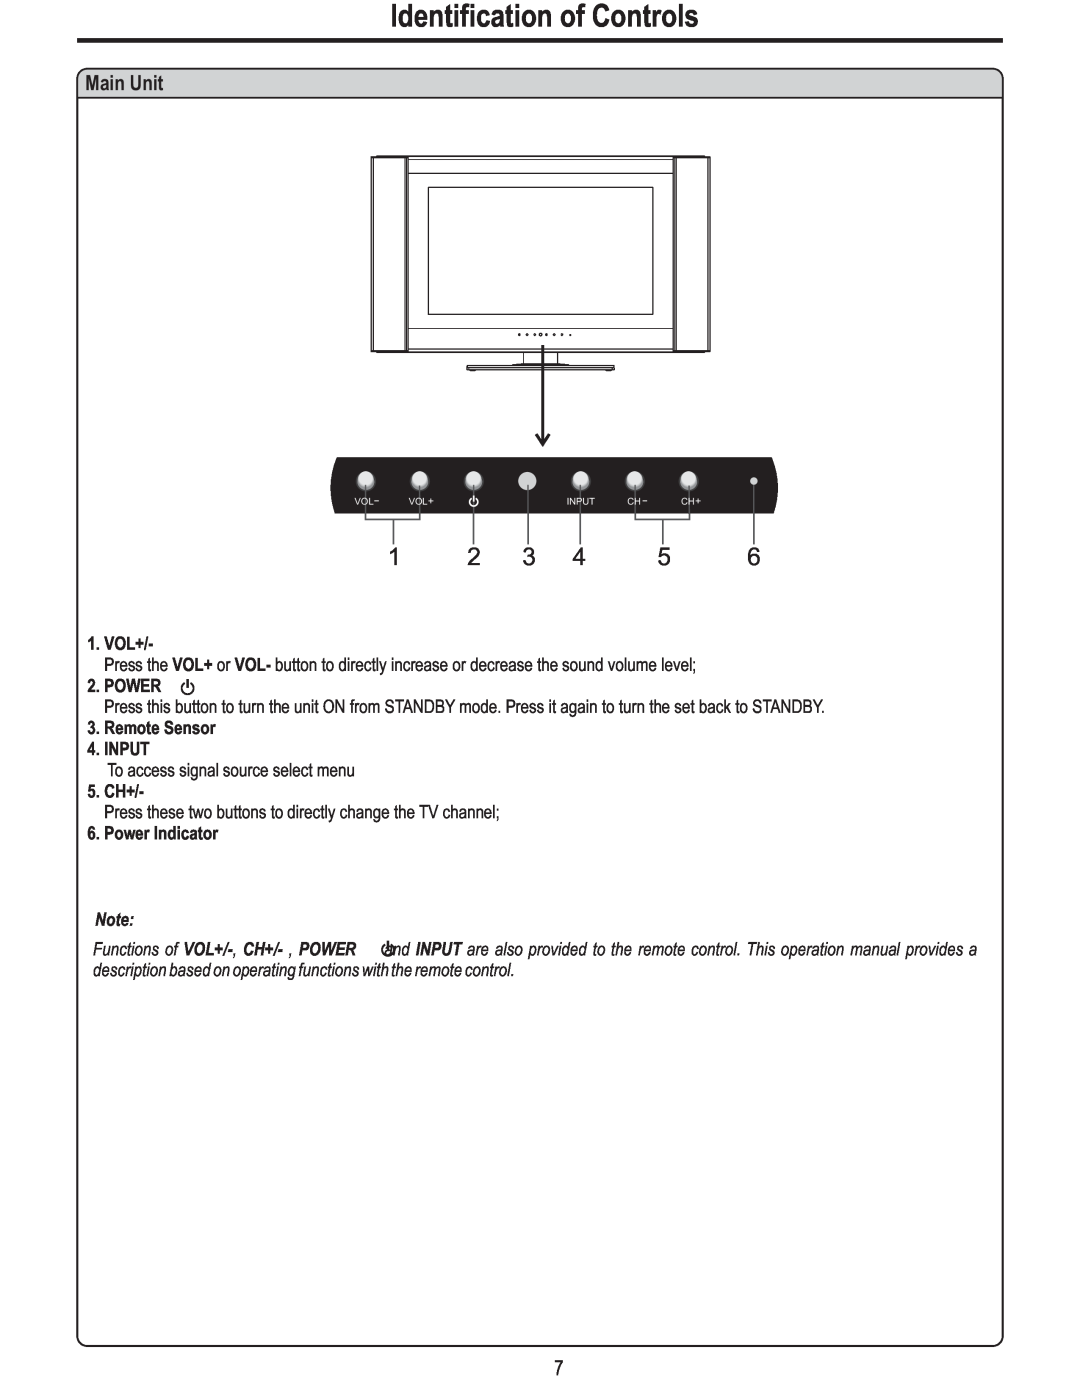 Polaroid FLM-3225 manual Identification of Controls, Main Unit 